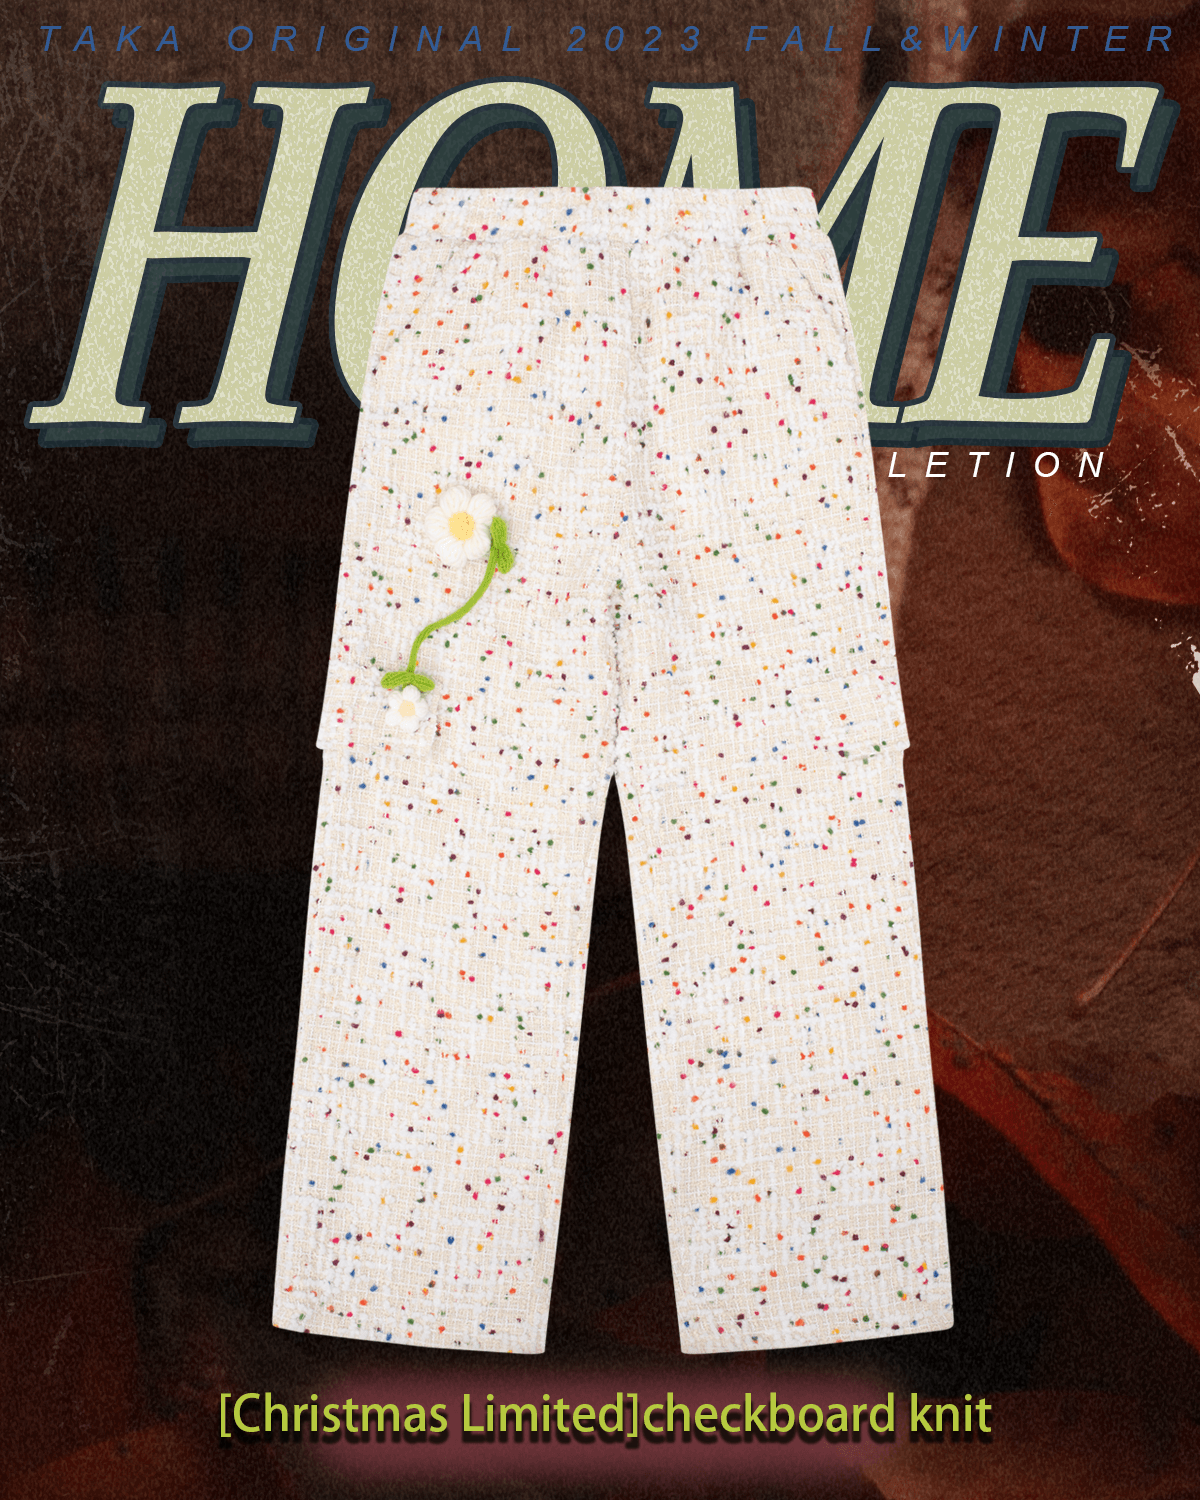 TAKA ORIGINAL LIMITED - TAKA Original HOME collection Daisy Homespun blend tweed Trousers